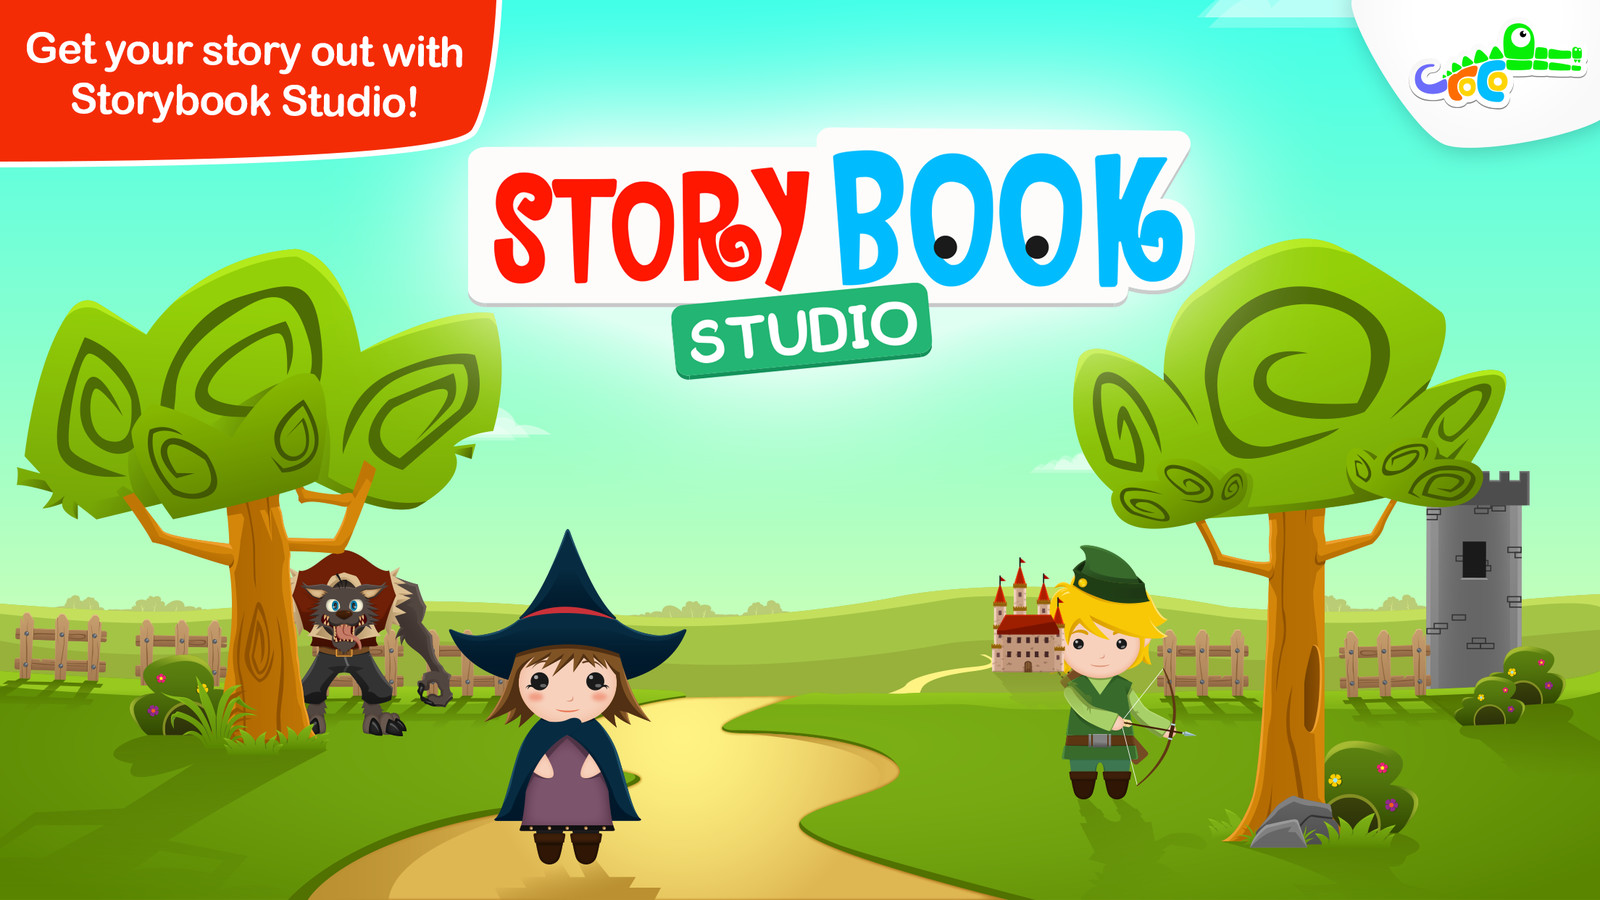 StoryBook Studio